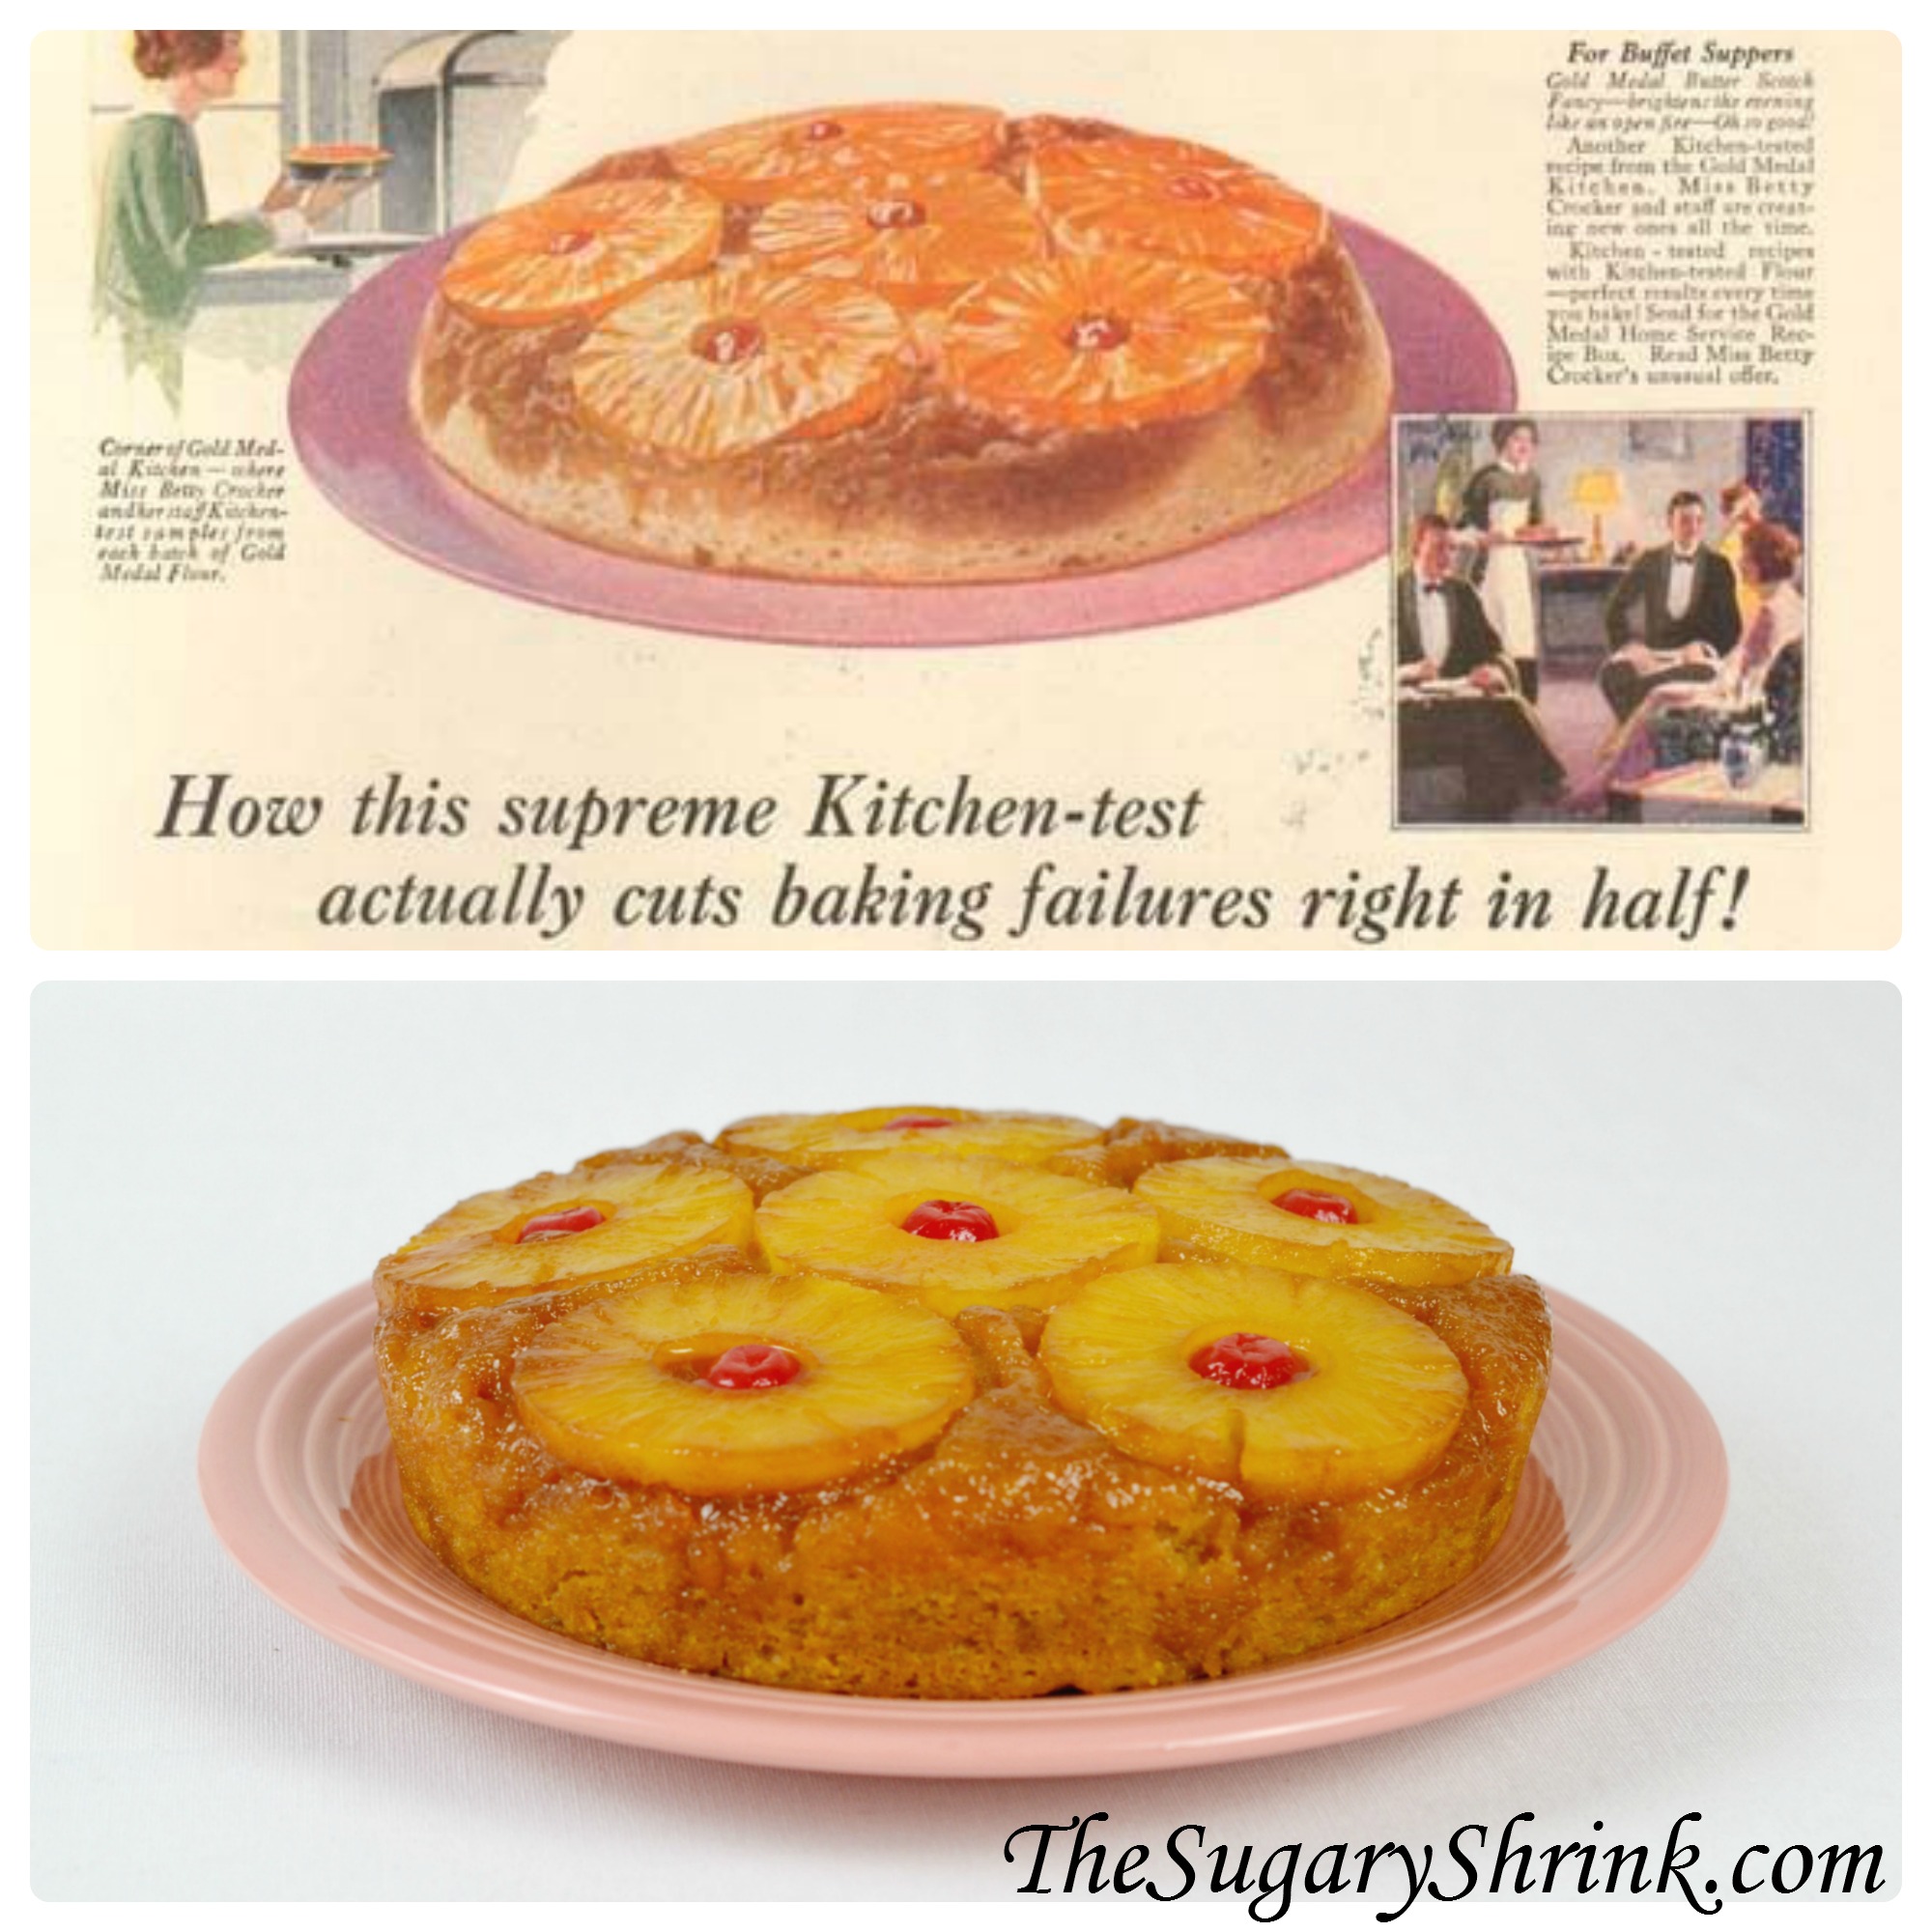 http://www.thesugaryshrink.com/wp-content/uploads/2016/01/pineapple-upside-down-cake-pink-vintage-ad-insta.jpg